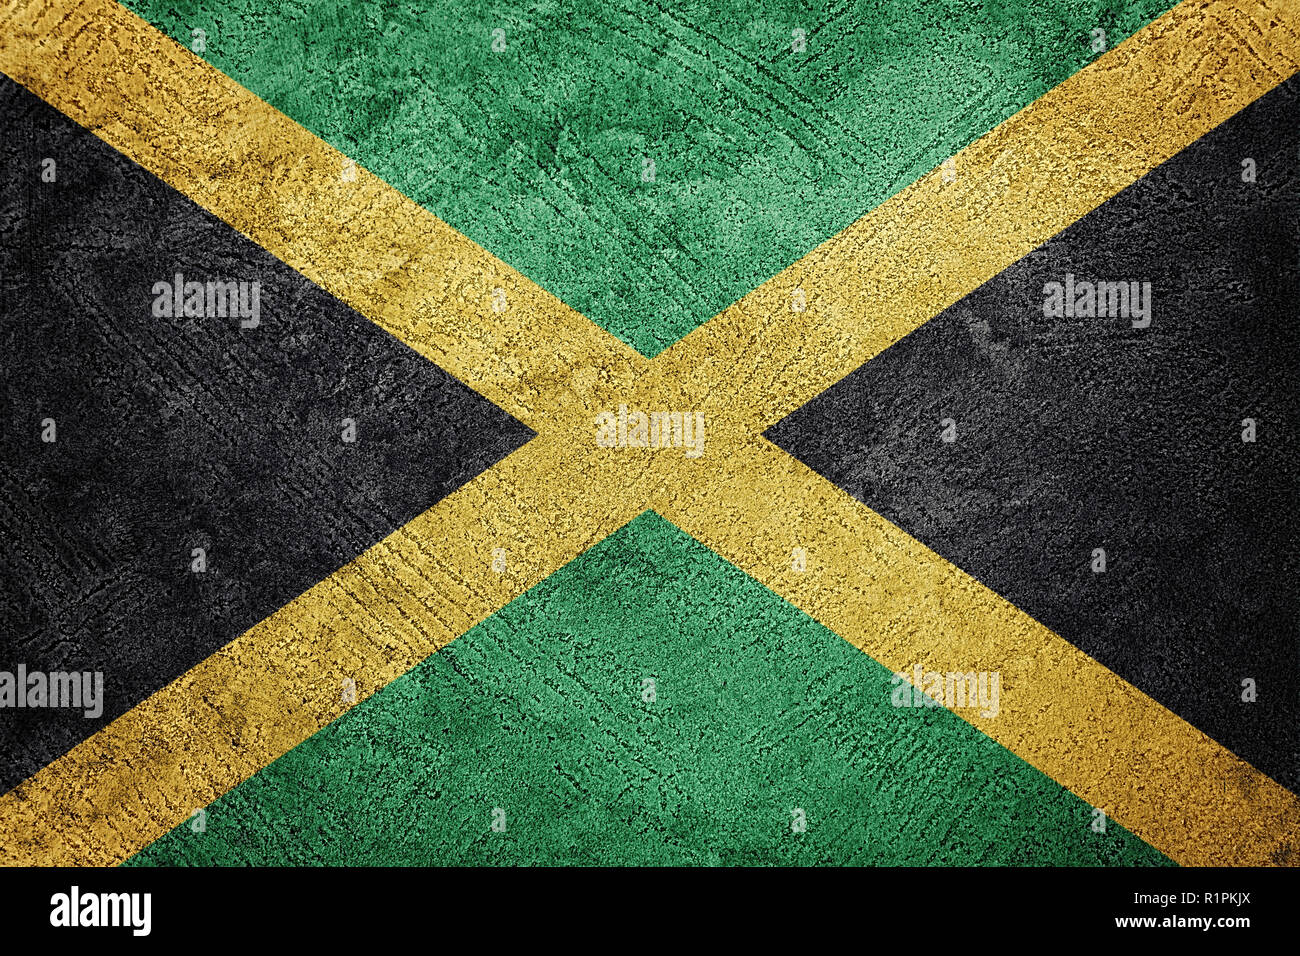 Grunge Jamaica flag. Jamaica flag with grunge texture. Stock Photo